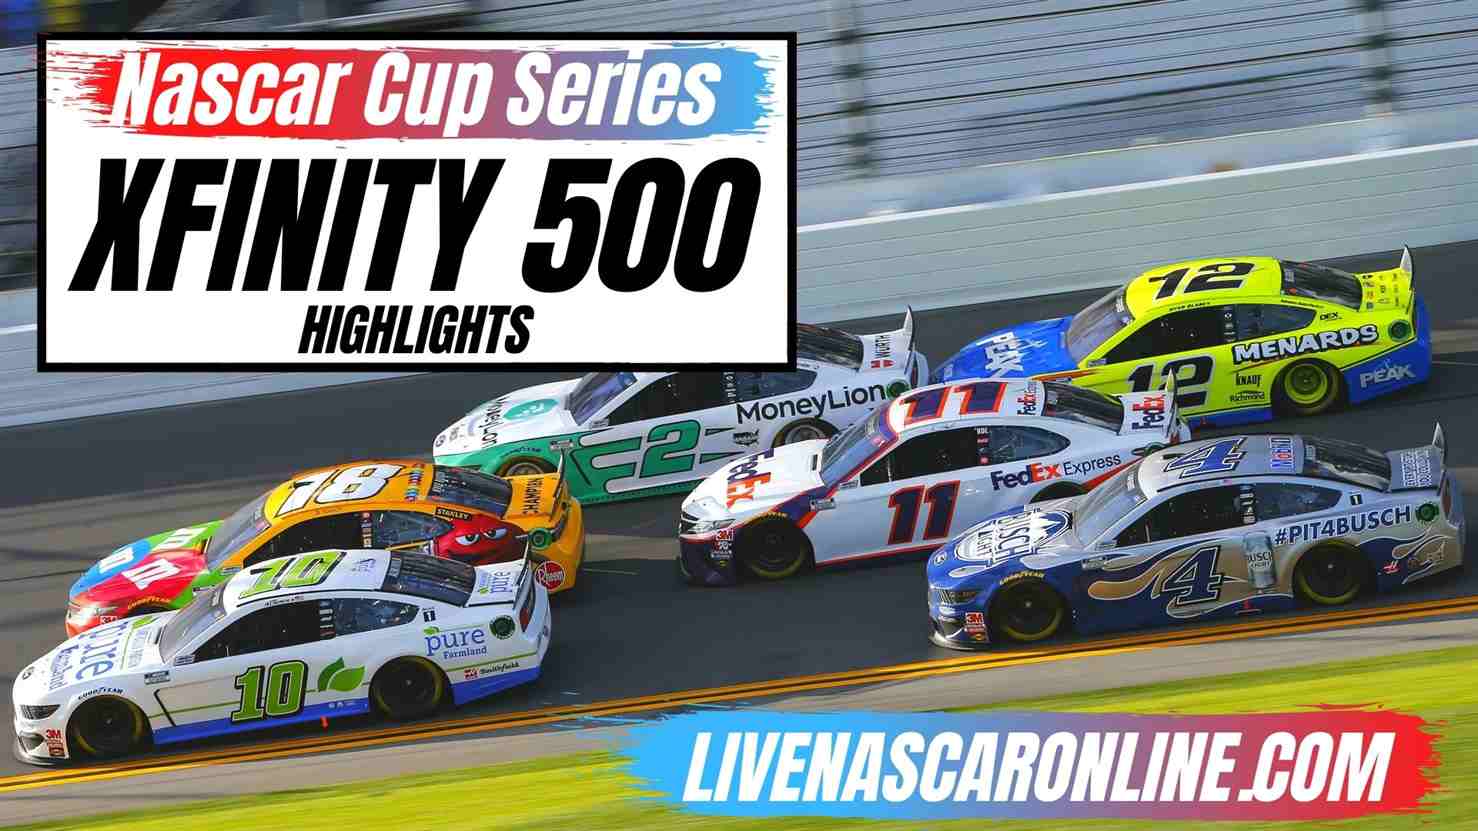 Xfinity 500 Highlights 2020 NASCAR Cup Series